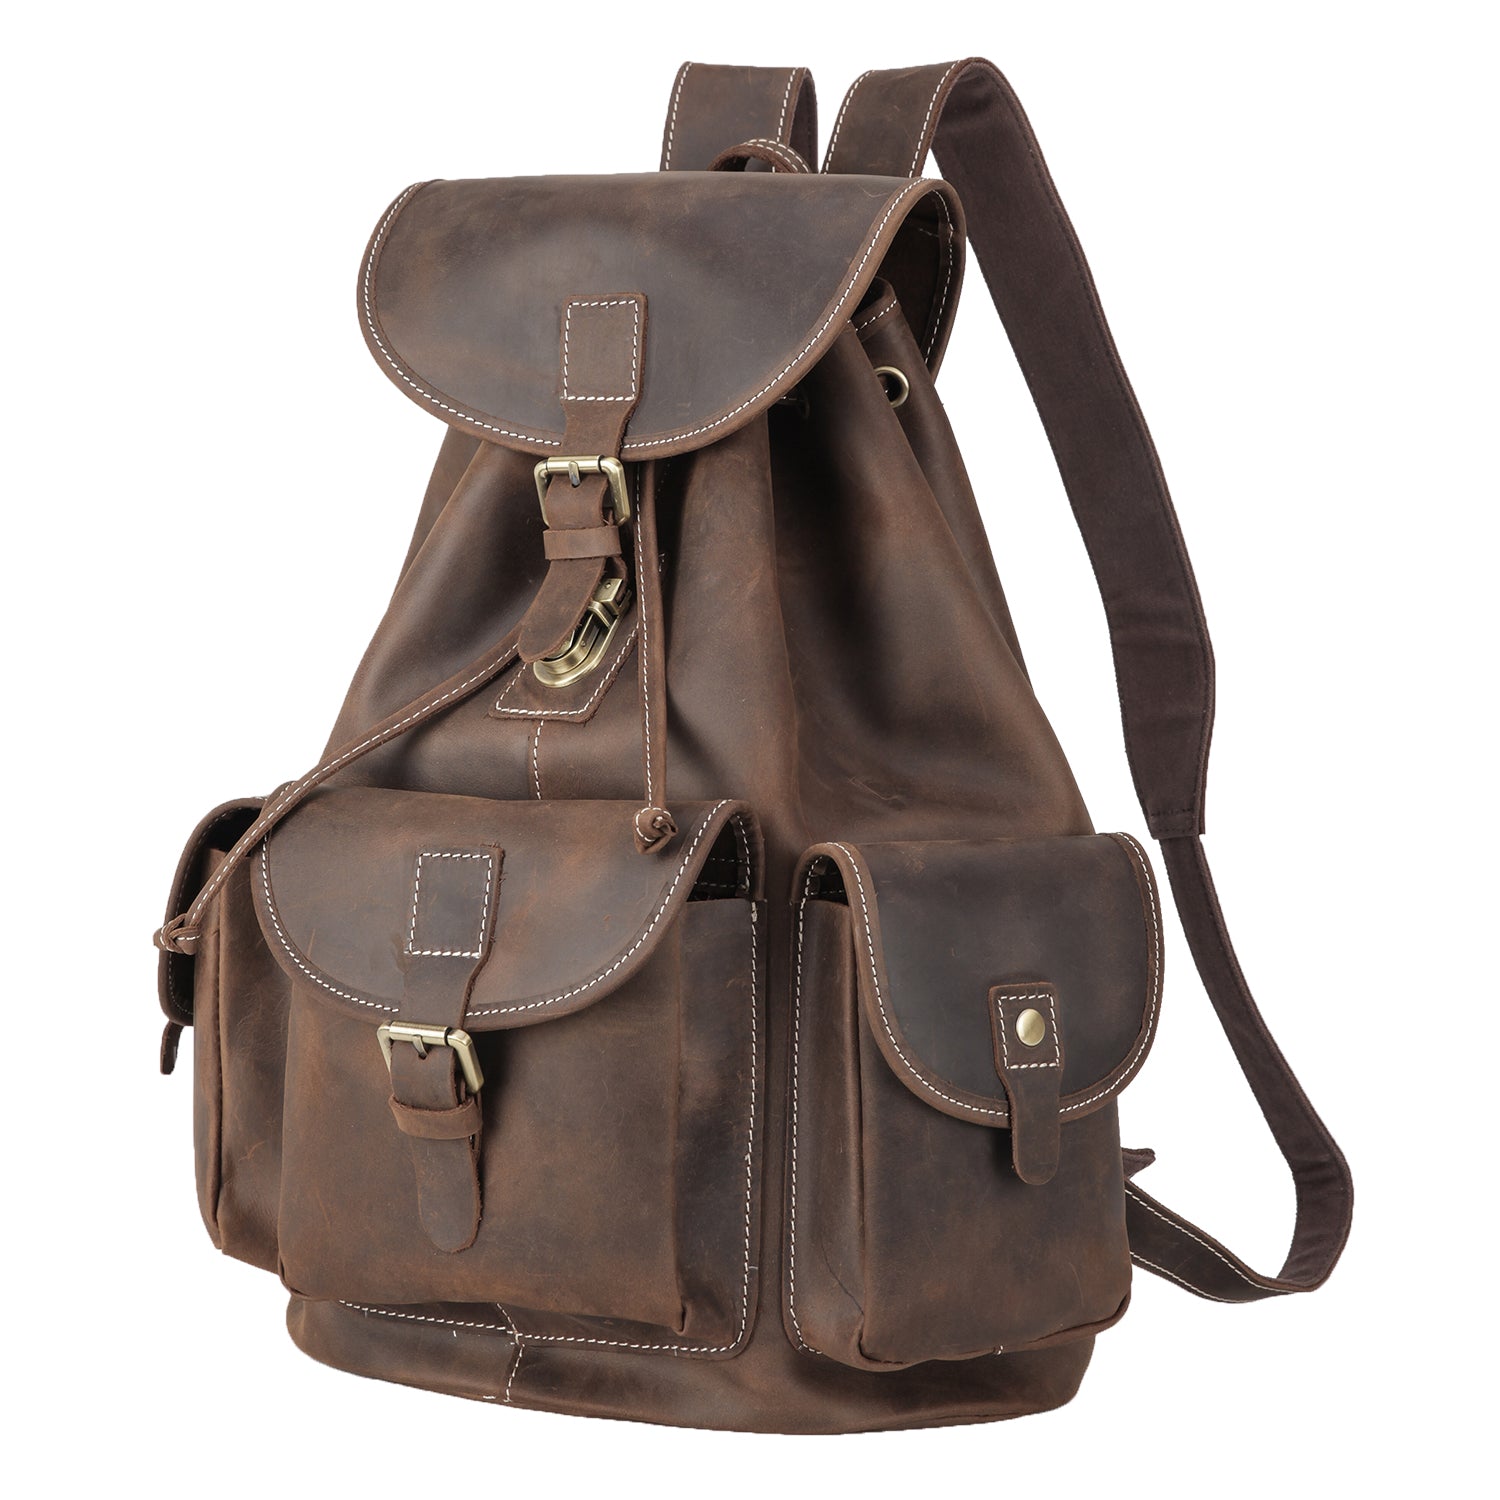 Vintage Brown Leather Bag